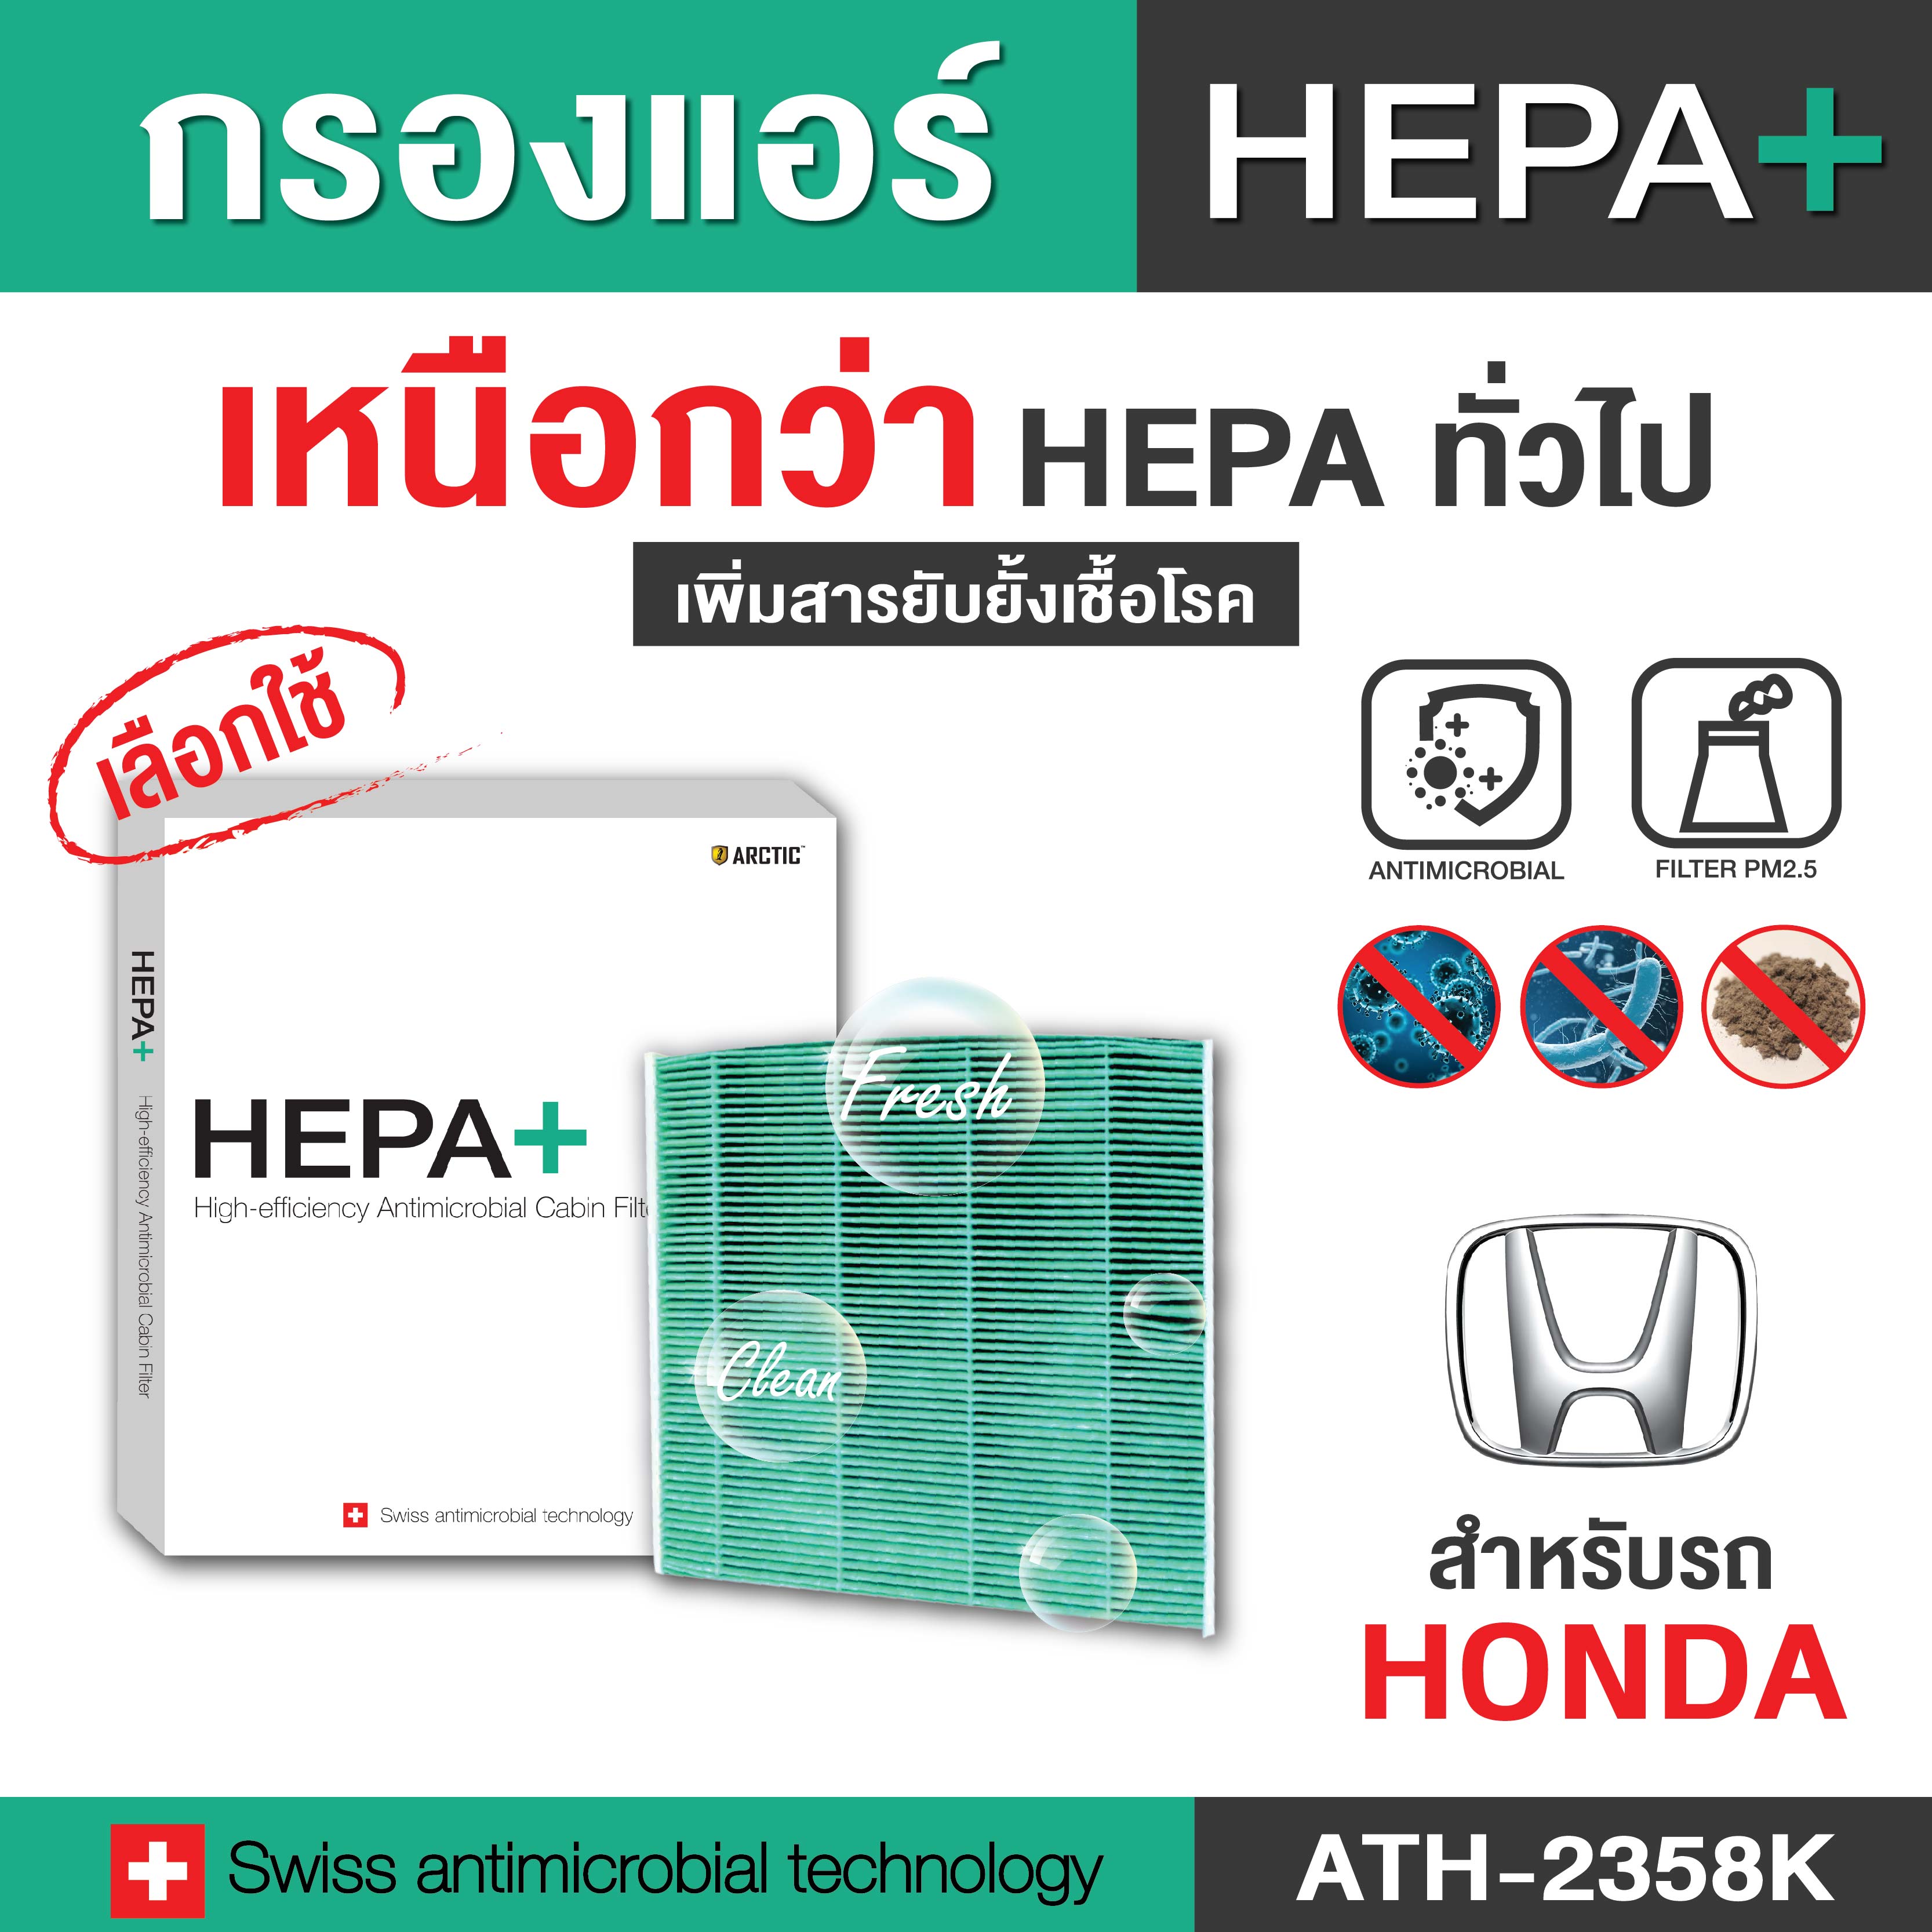 (Hepa Plus) กรองแอร์ Hepa Filter สำหรับ Honda |กรองแอร์รถยนต์ Hepa Plus 2in1 ยับยั้งเชื้อโรค + ดักจับฝุ่น pm2.5 สูงถึง 99% (ตรงรุ่น 100%) (ATH-2358K) *ดูรุ่นรถในรูป